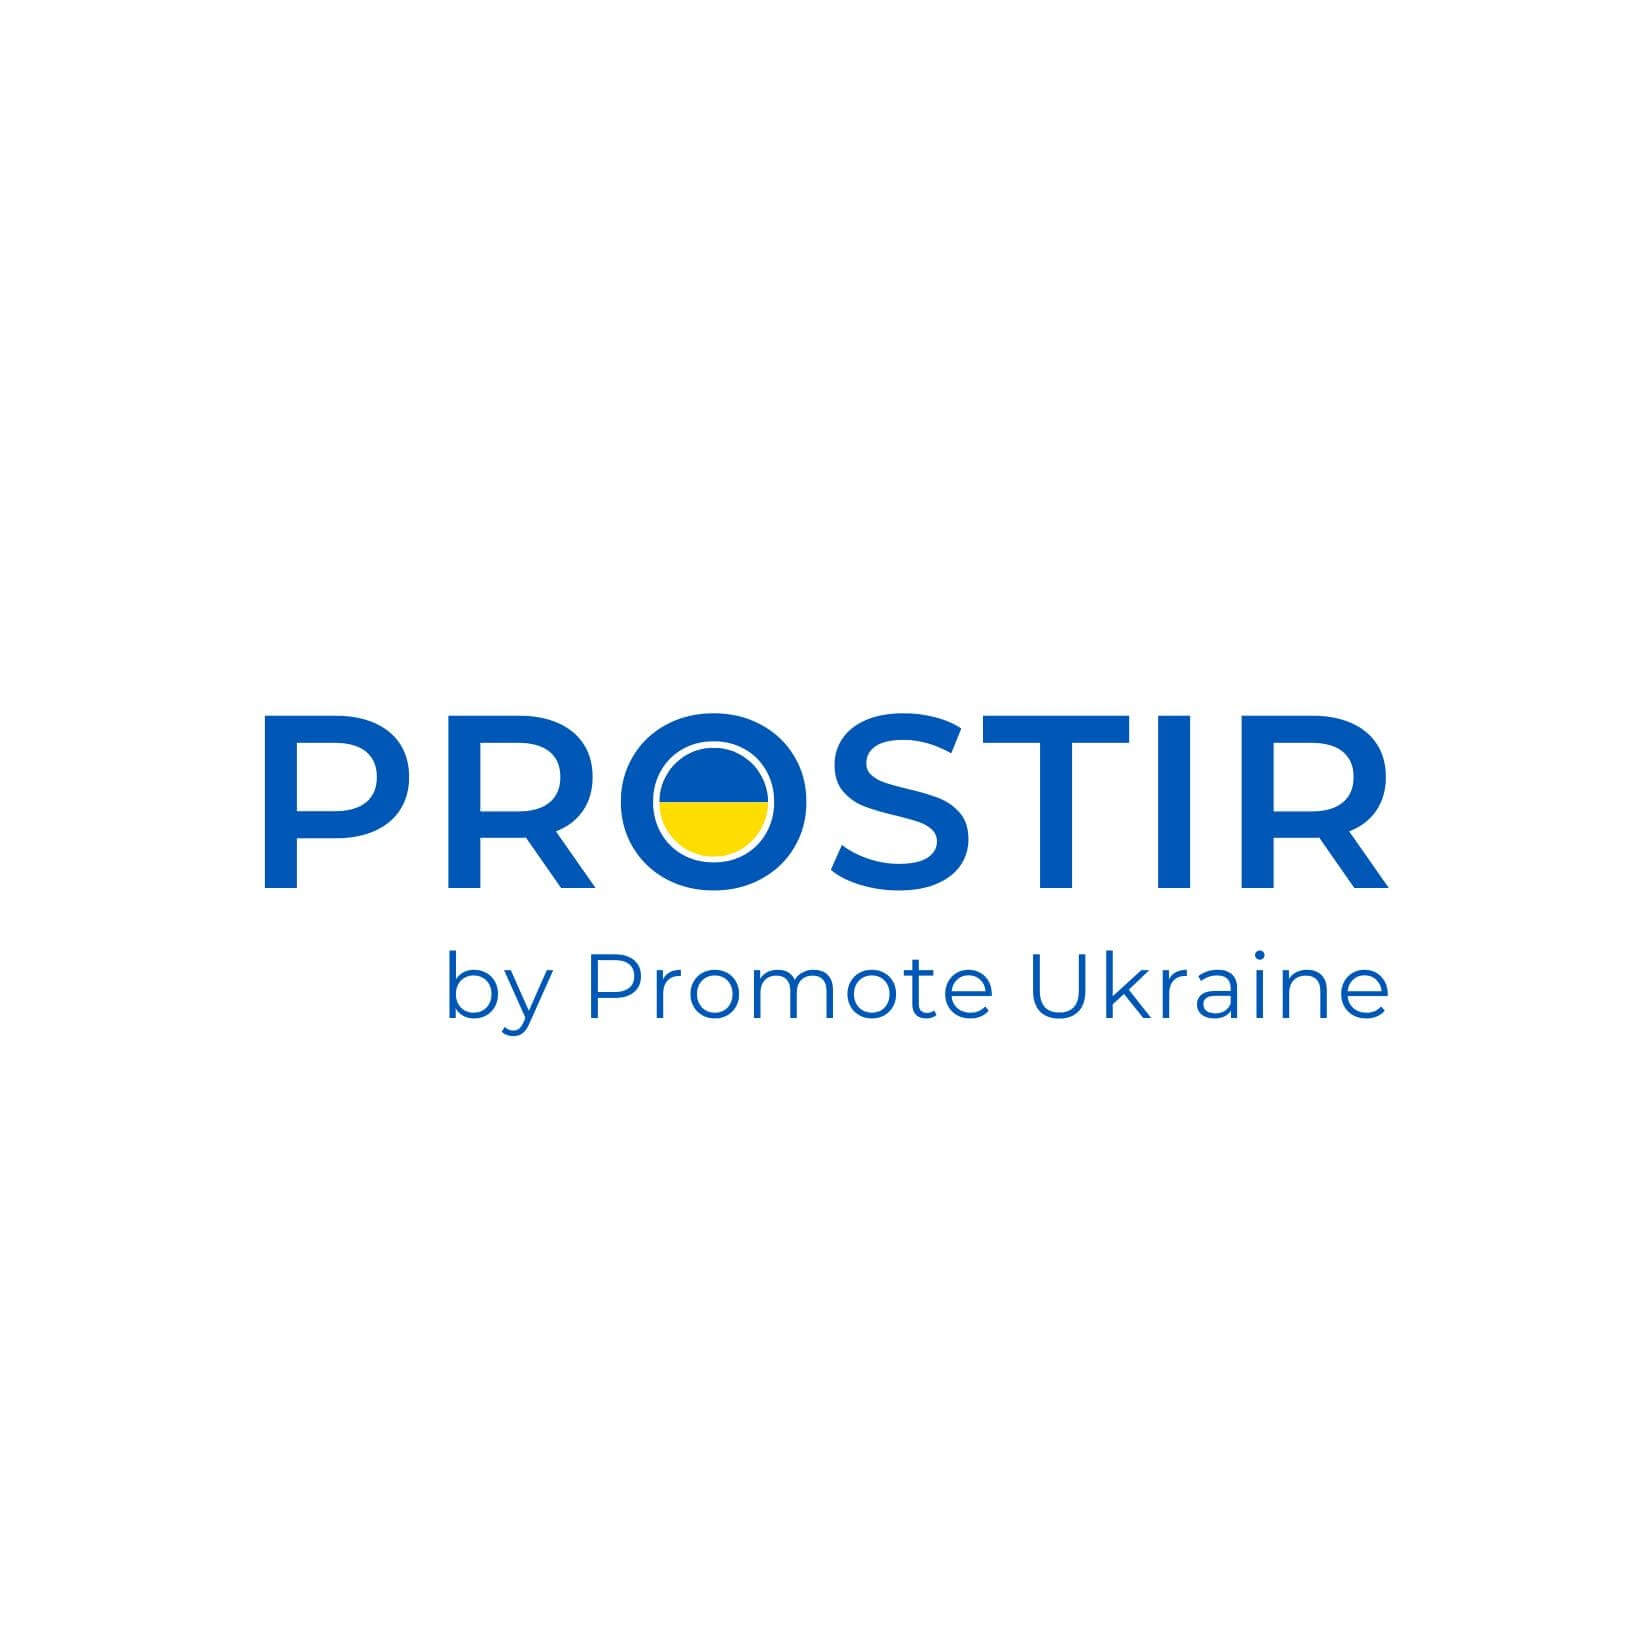 Prostir by Promote Ukraine